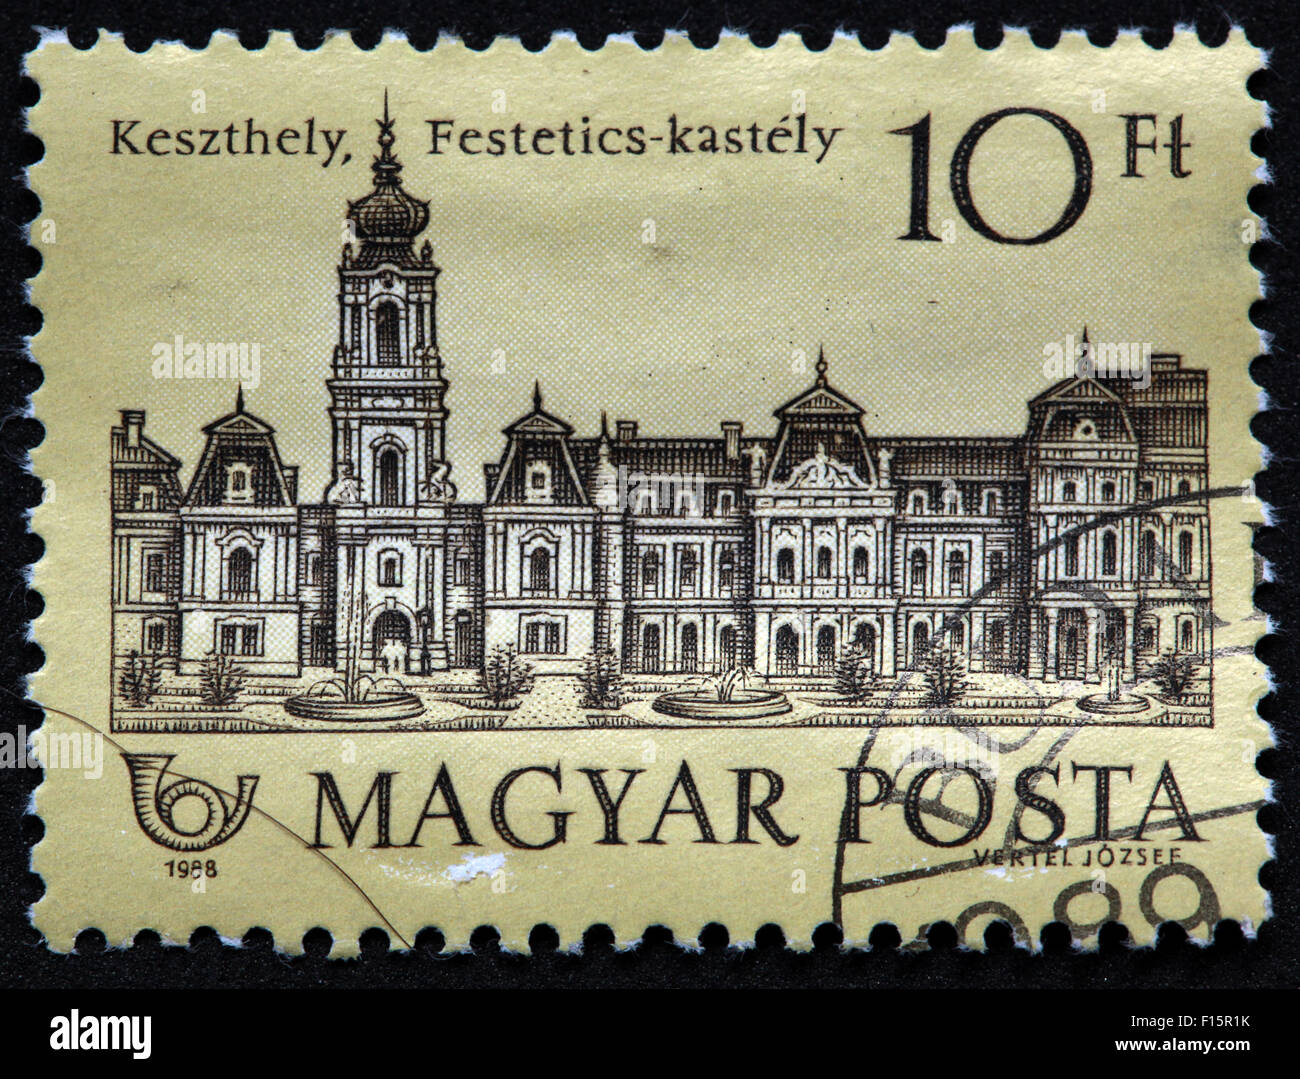 Magyar Posta vertel Jozsee 10ft Keszthely Festetics-kastely 1988 Stamp, Hongrie Banque D'Images